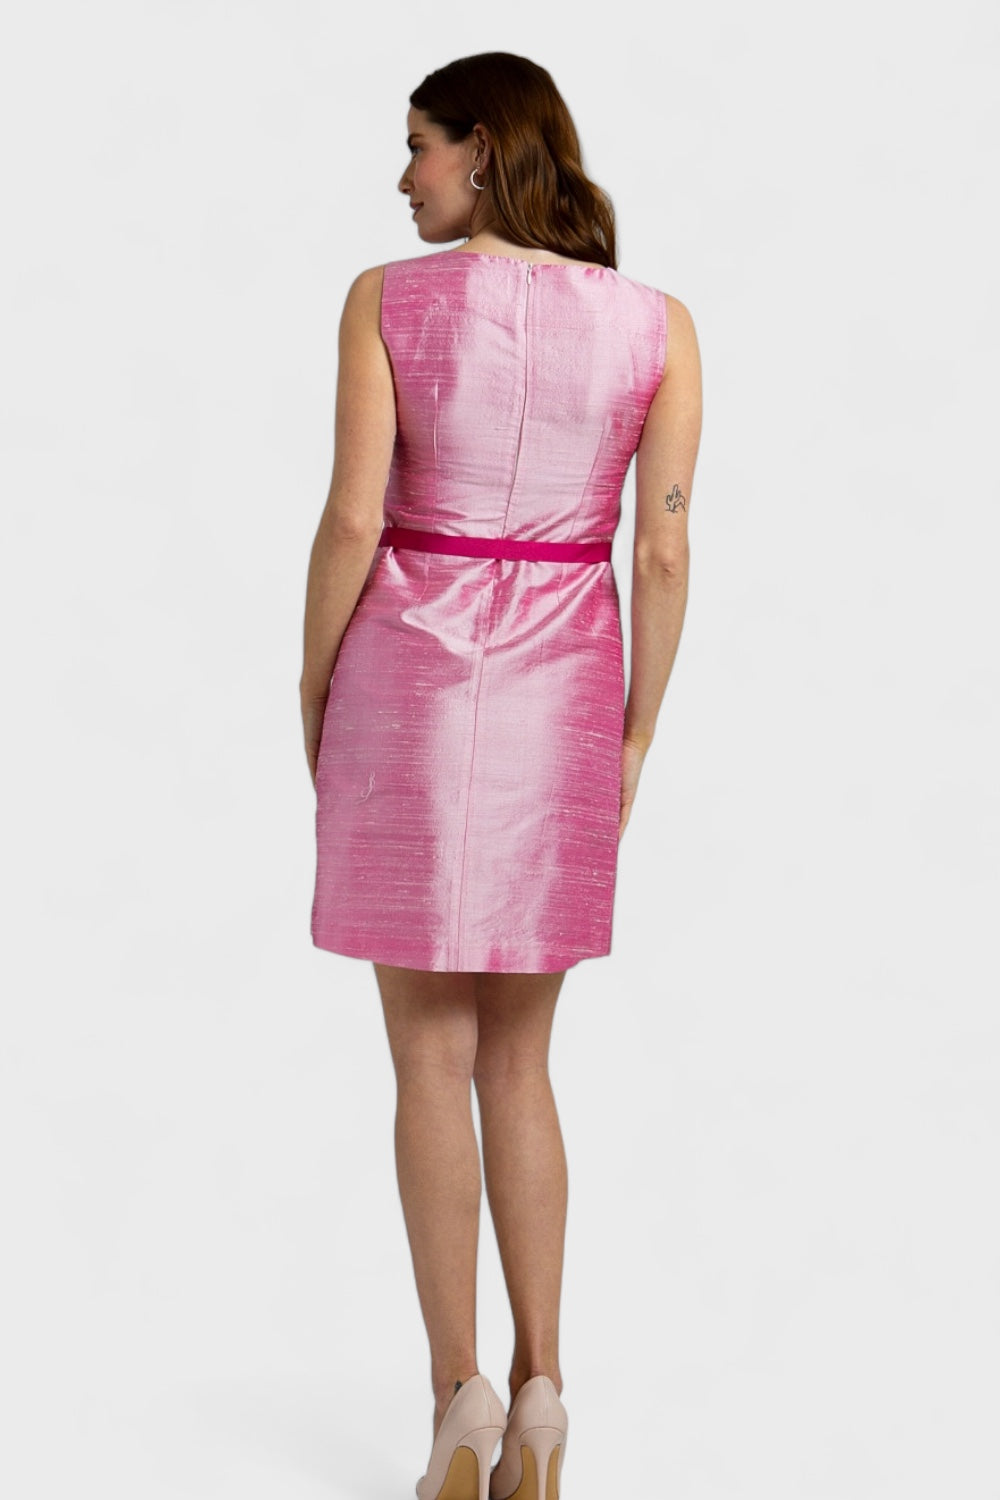 Lia Pink Silk A-Line Shift Dress by Sara Sabella Italian Women's Fashion